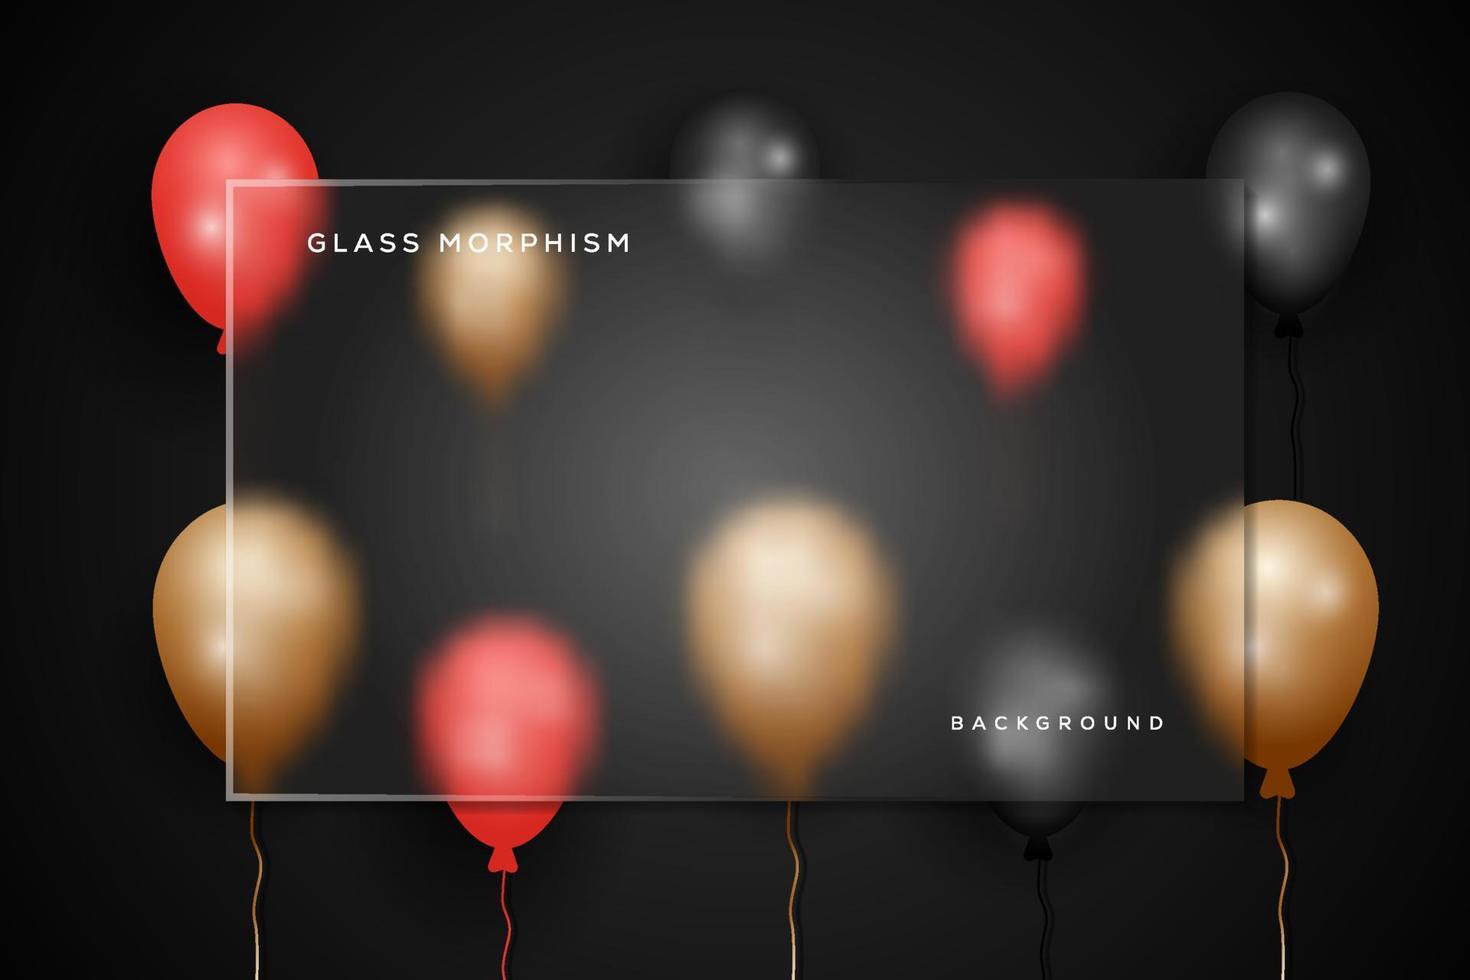 glasmorphismusillustration mit heliumballonhintergrund vektor